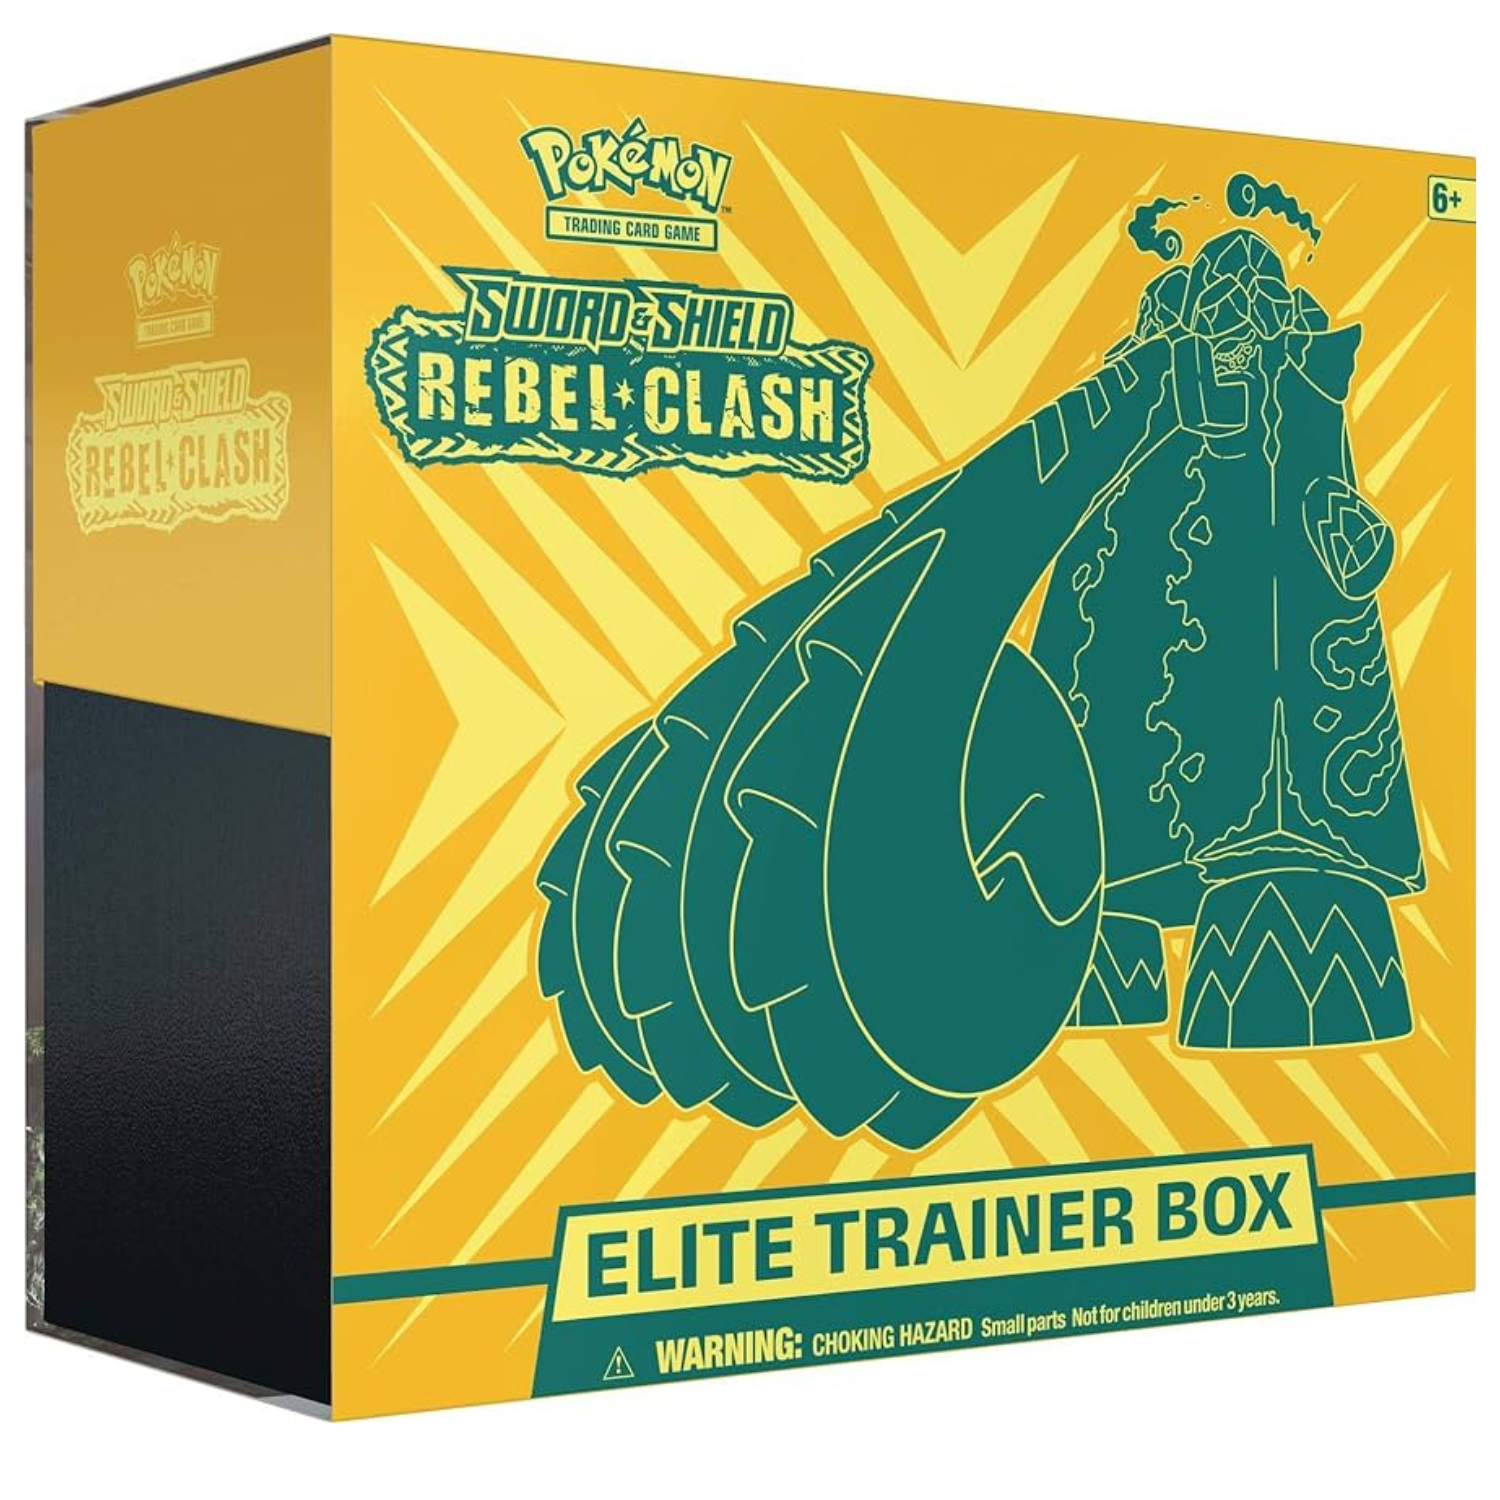 Pokémon TCG: Sword & Shield 2 - Rebel Clash Elite Trainer Box Español